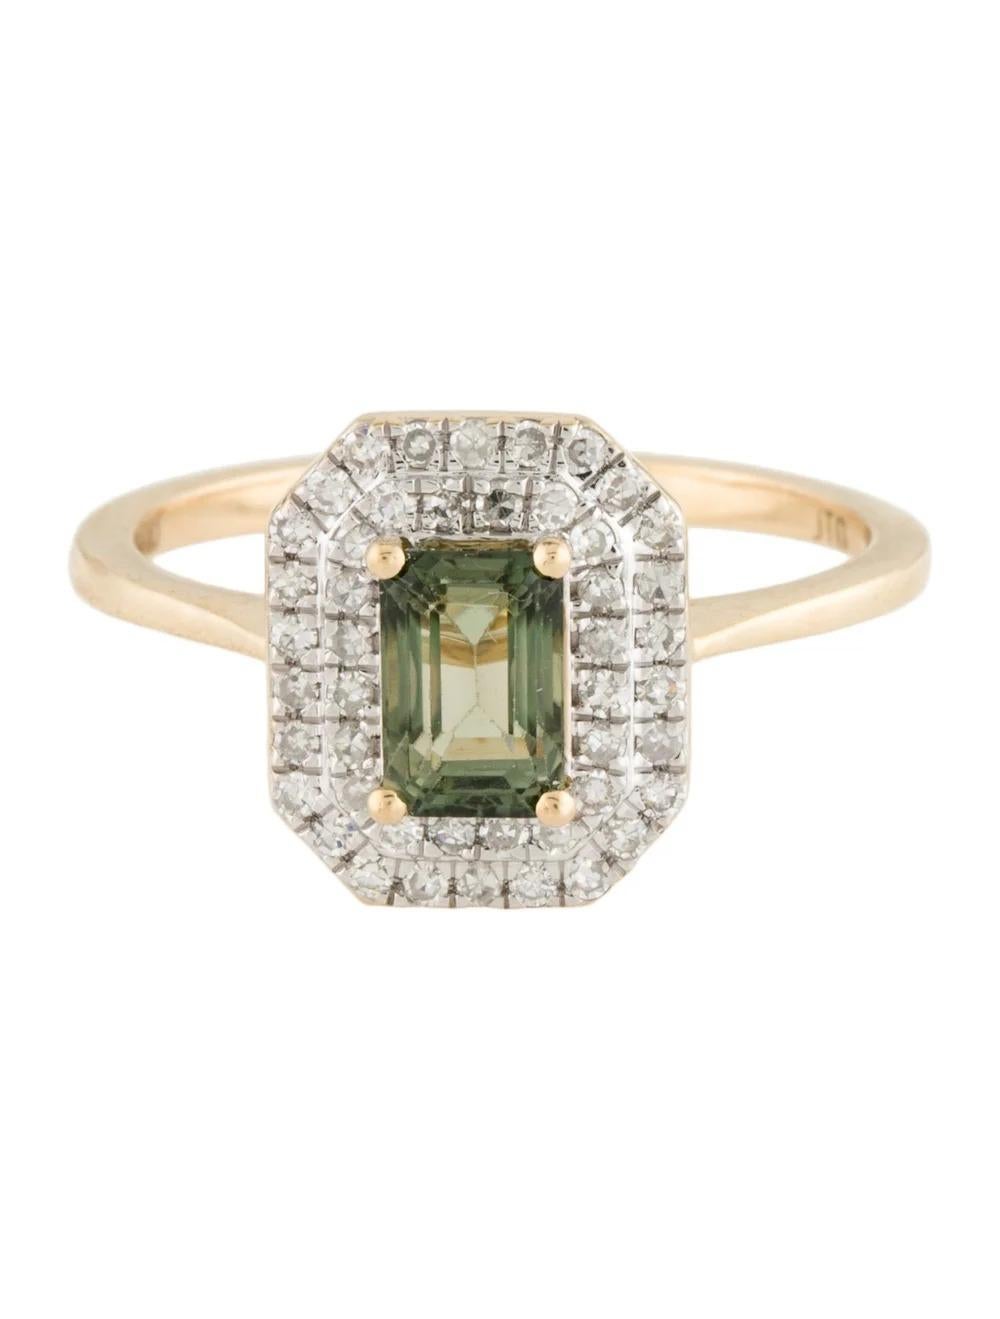 Emerald Cut Vintage 14K Tourmaline Diamond Cocktail Ring Size 6.25 - Fine Statement Jewelry For Sale